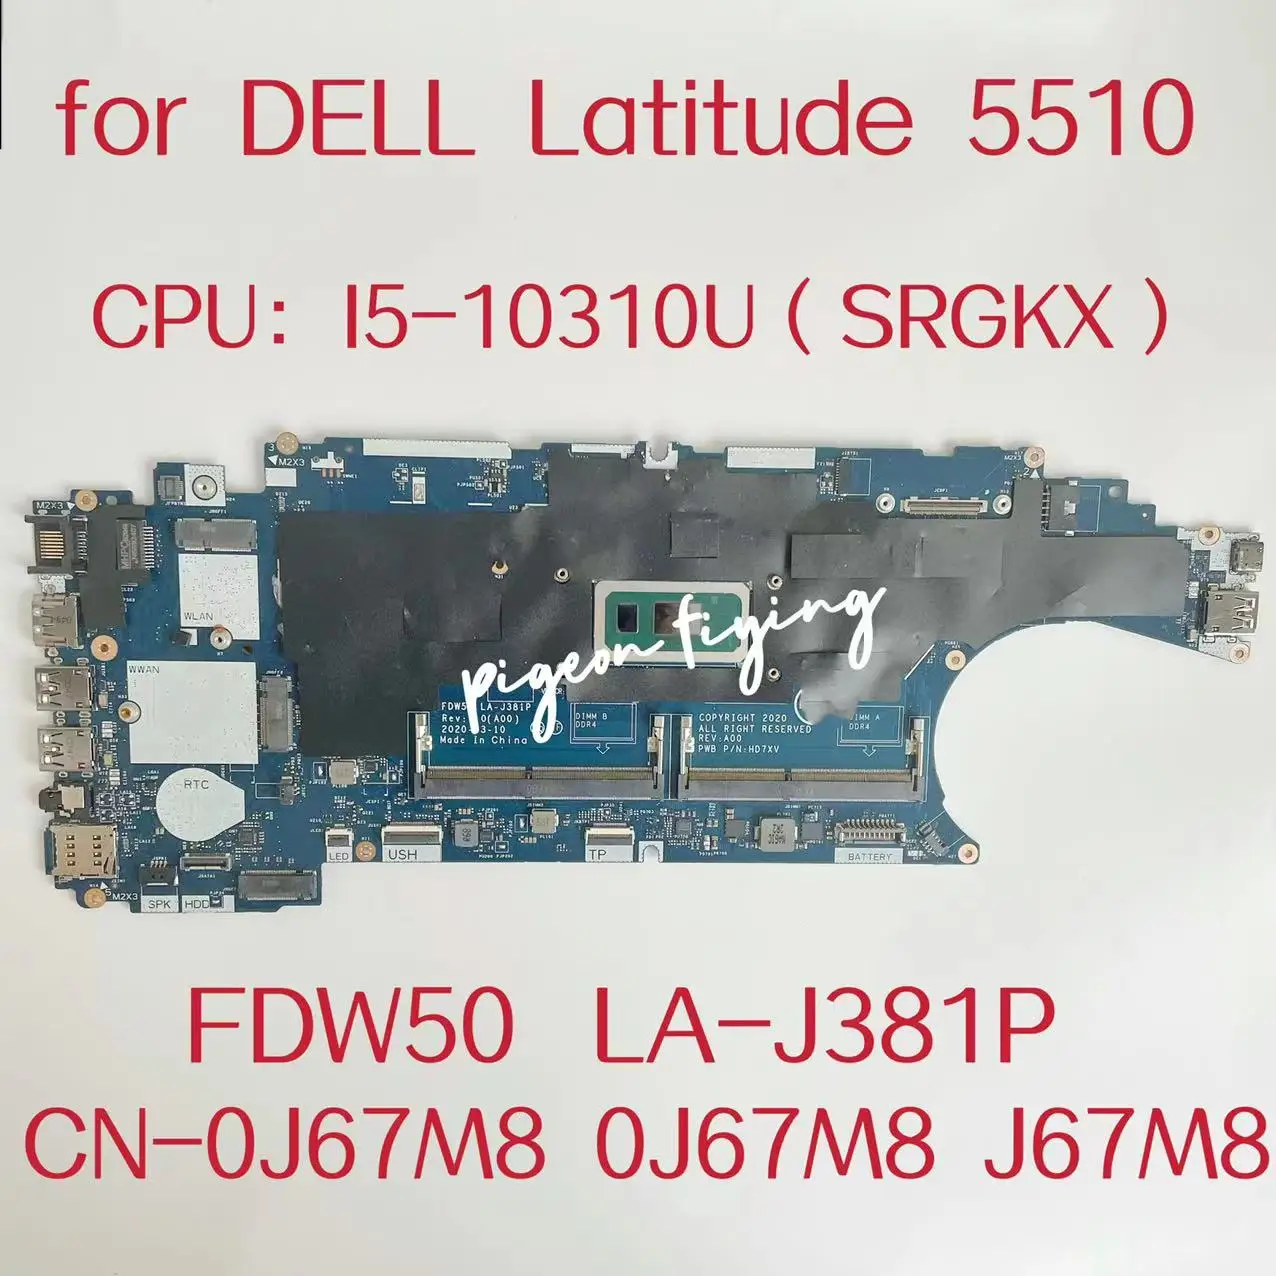 

FDW50 LA-J381P For Dell Latitude 5510 Laptop Motherboard CPU:I5-10310U SRGKX DDR4 CN-0J67M8 0J67M8 J67M8 100% Tested OK